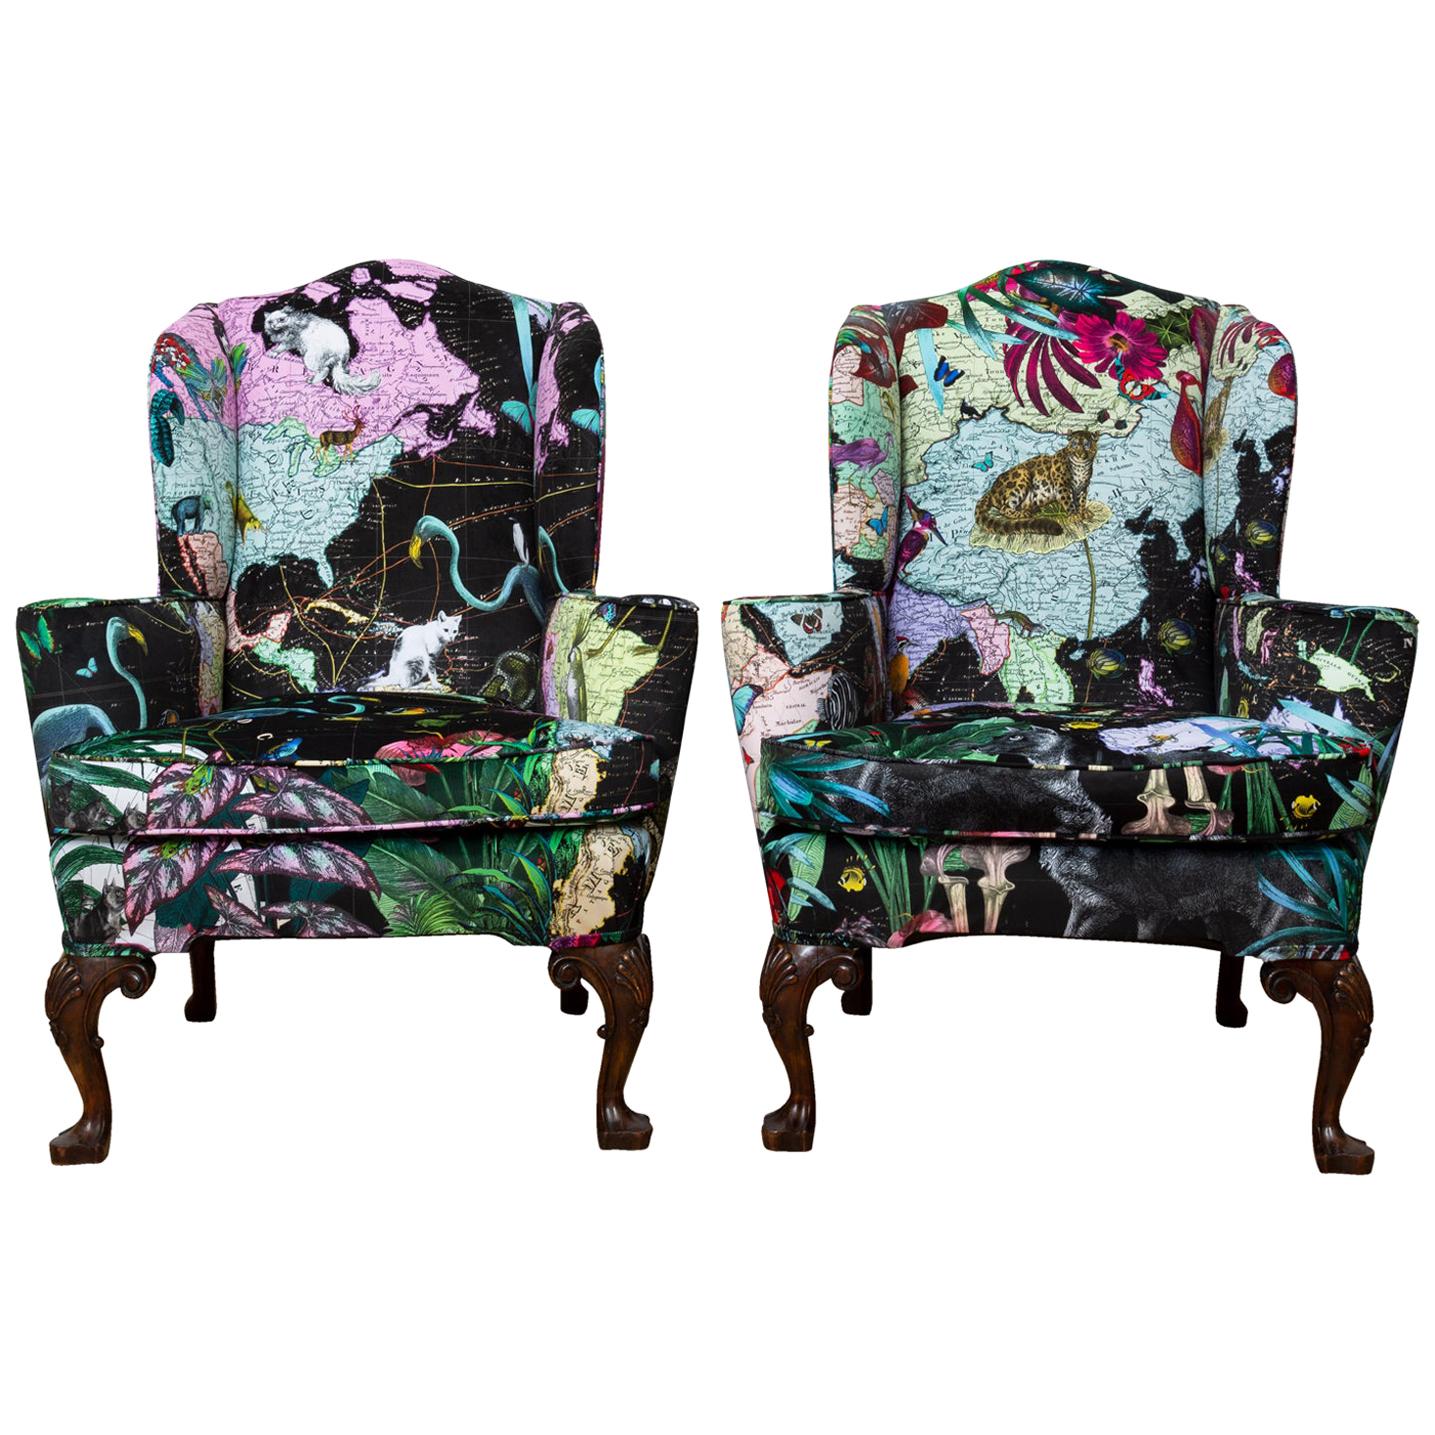 Queen Anne Style Wingback Chairs in Custom ‘Black Neon World' Velvet Upholstery For Sale